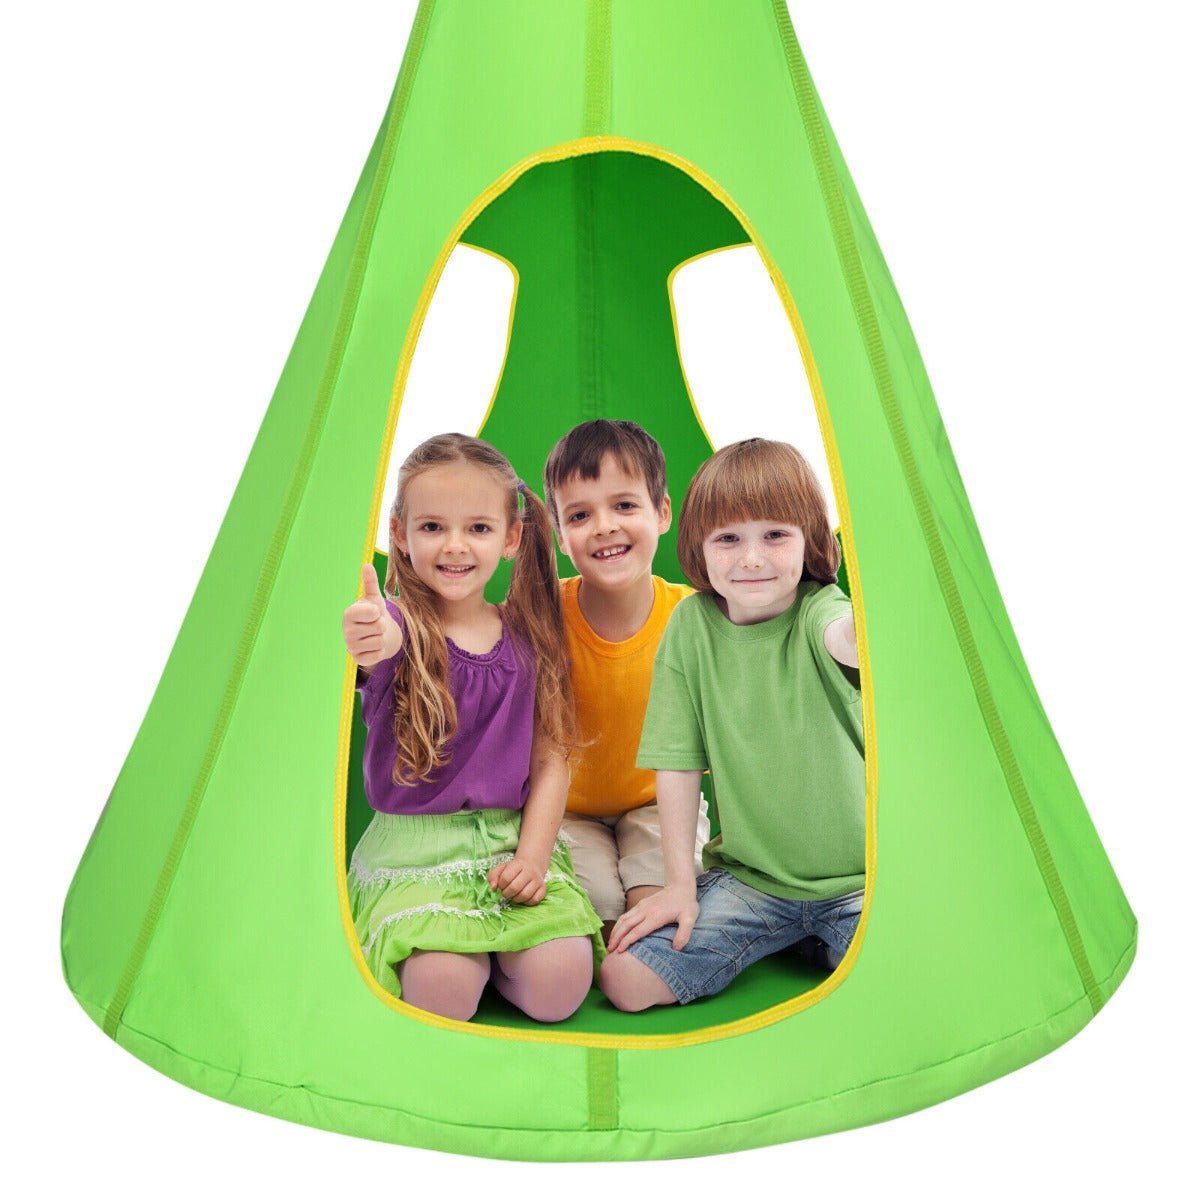 Vibrant Adventure: Kids Nest Swing Tent Green 80cm, Swing into the Wild